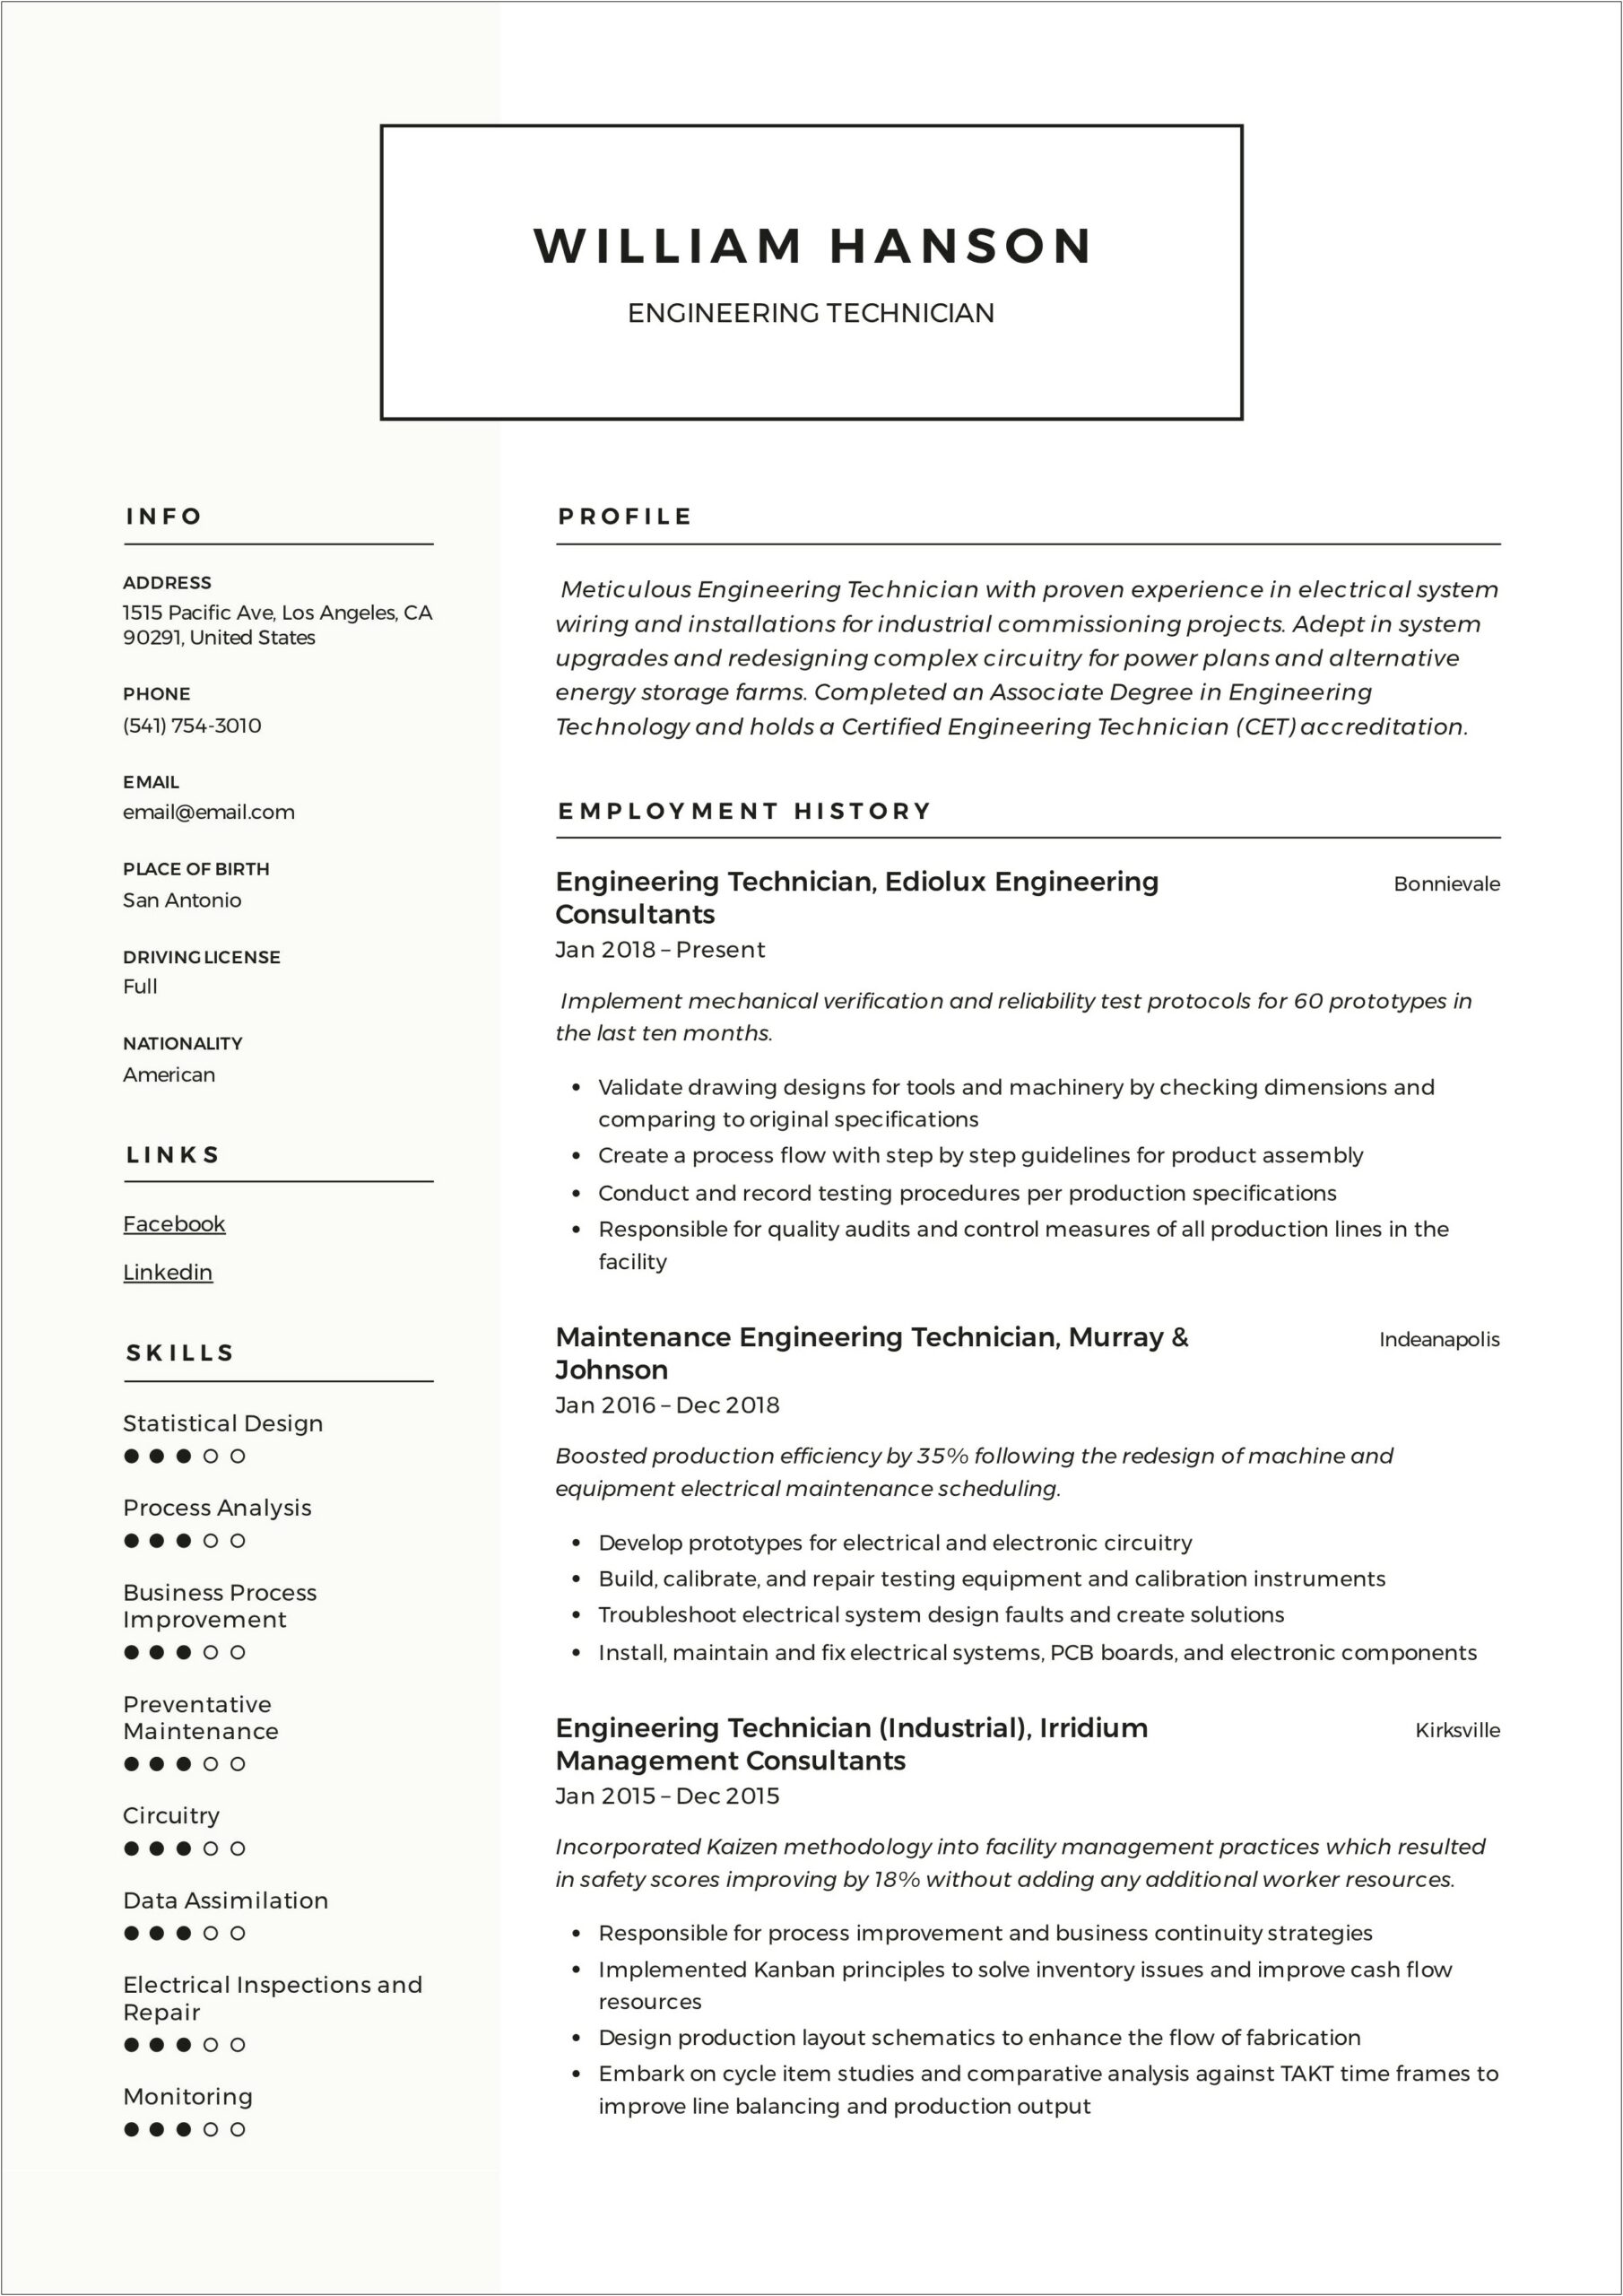 Resume Objective Examples Engineering Technician